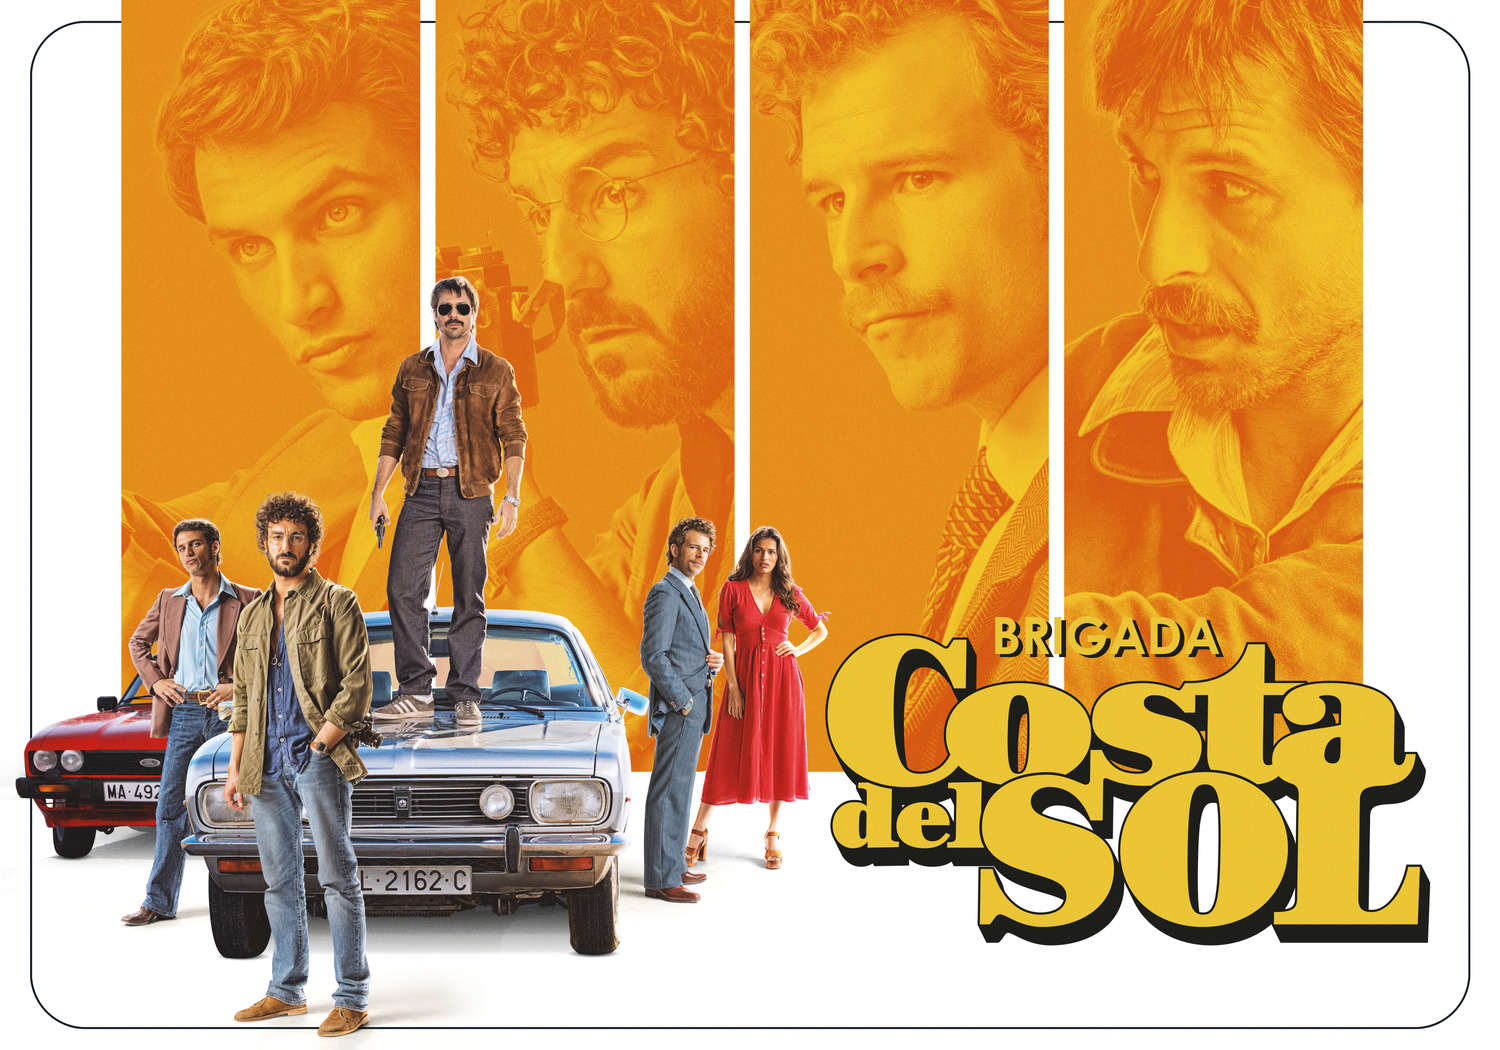 Extra Large TV Poster Image for Brigada Costa del Sol (#21 of 23)